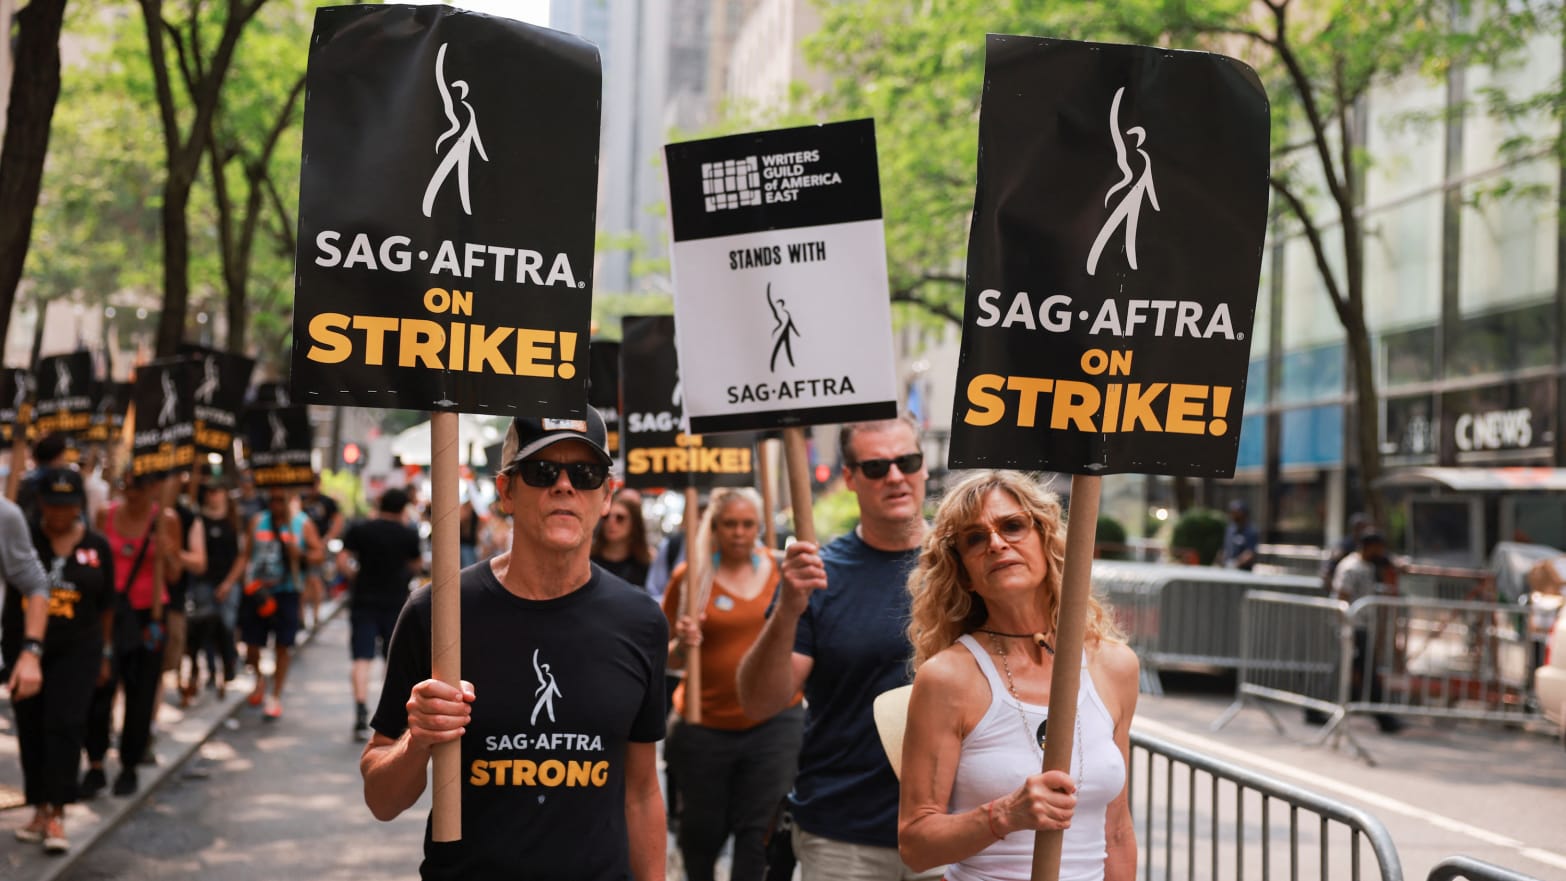 Kevin Bacon and Kyra Sedgwick at a SAG-AFTRA strike in New York